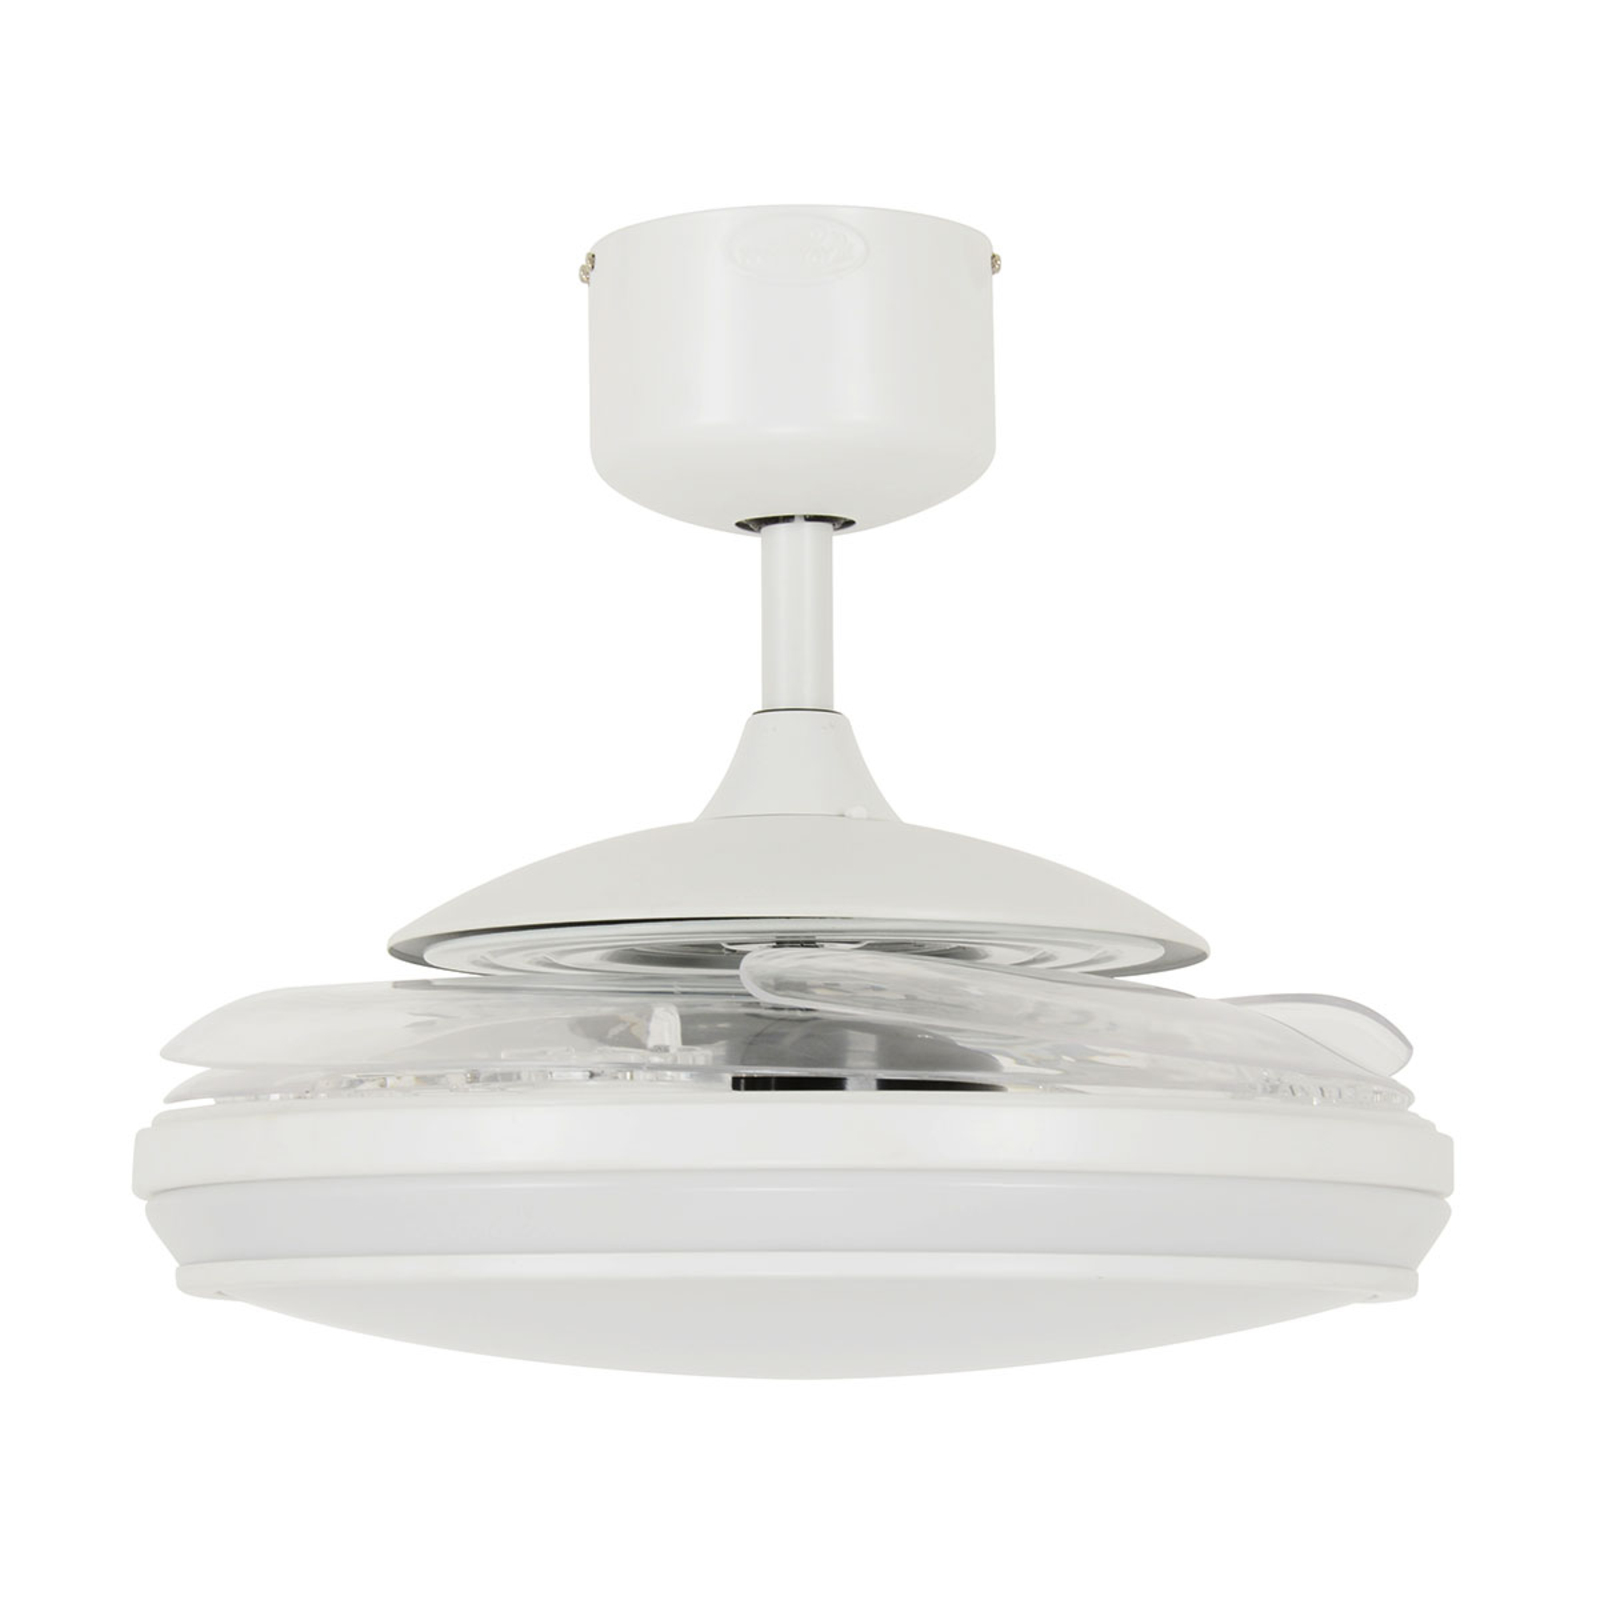 Ventilateur de plafond LED Beacon Fanaway Evo 1 blanc 121 cm silencieux